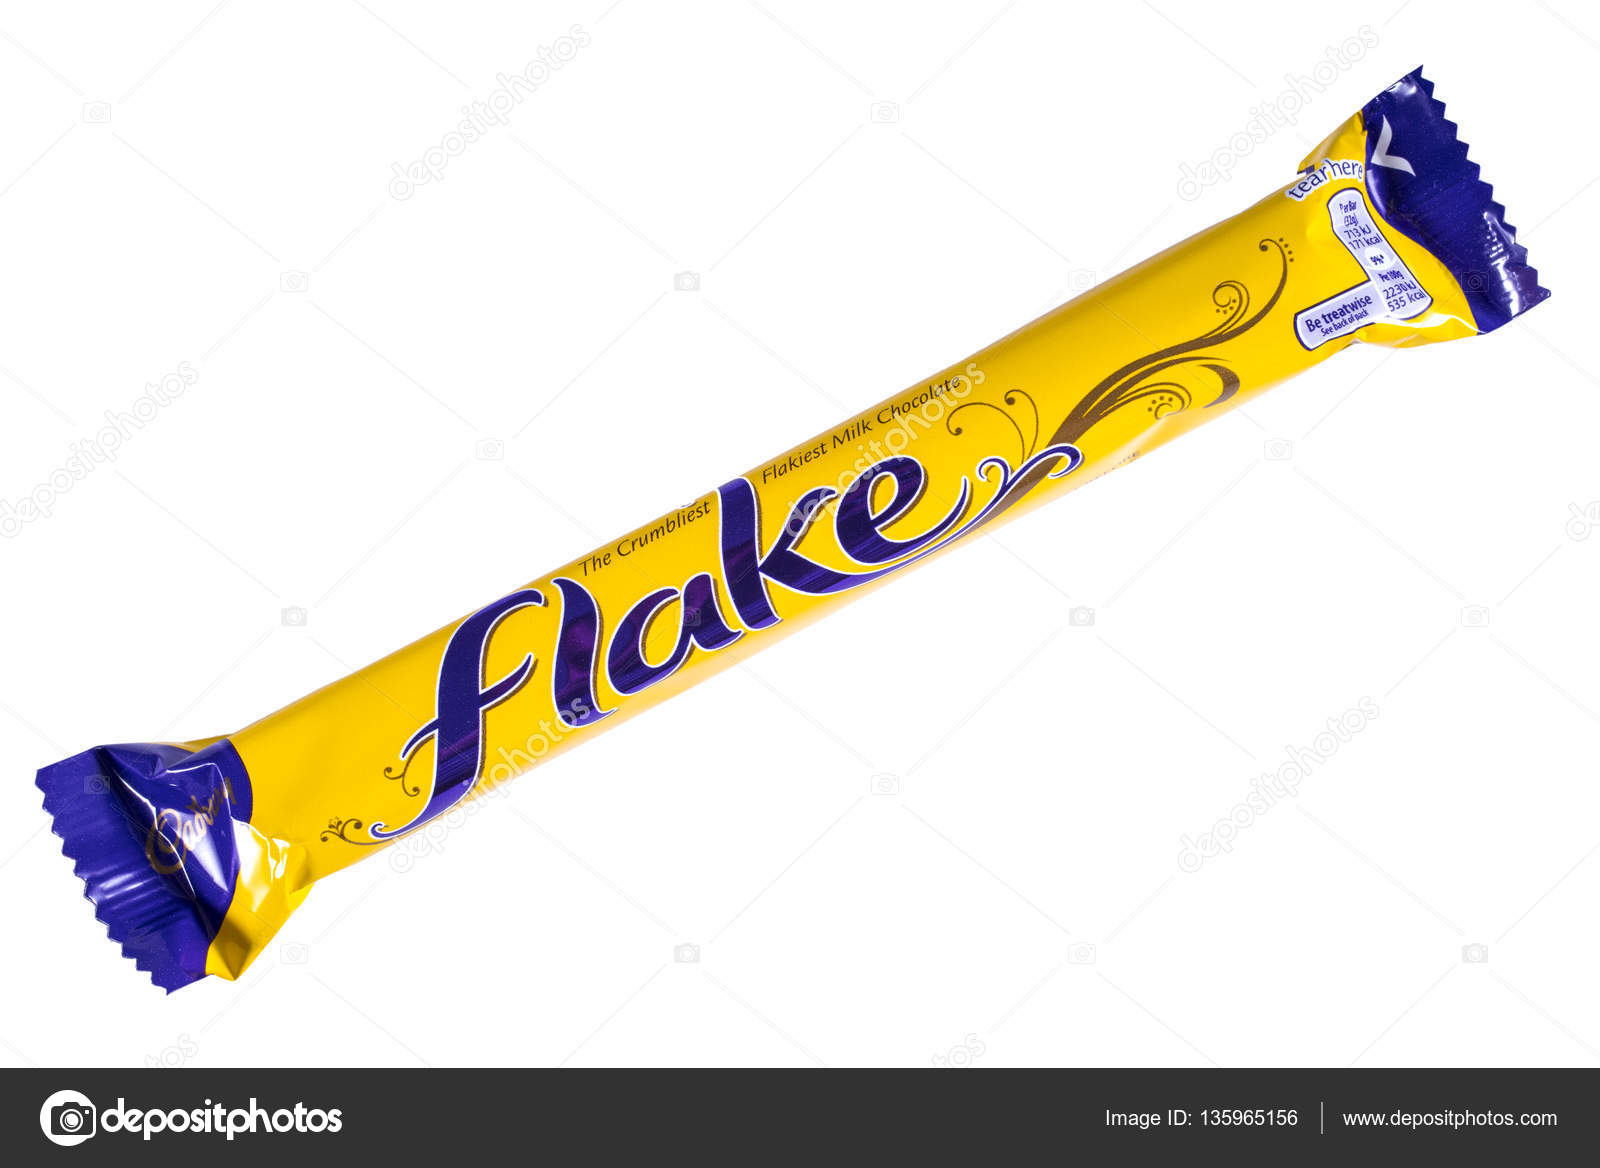 Cadbury Flake  Chocolate Bar